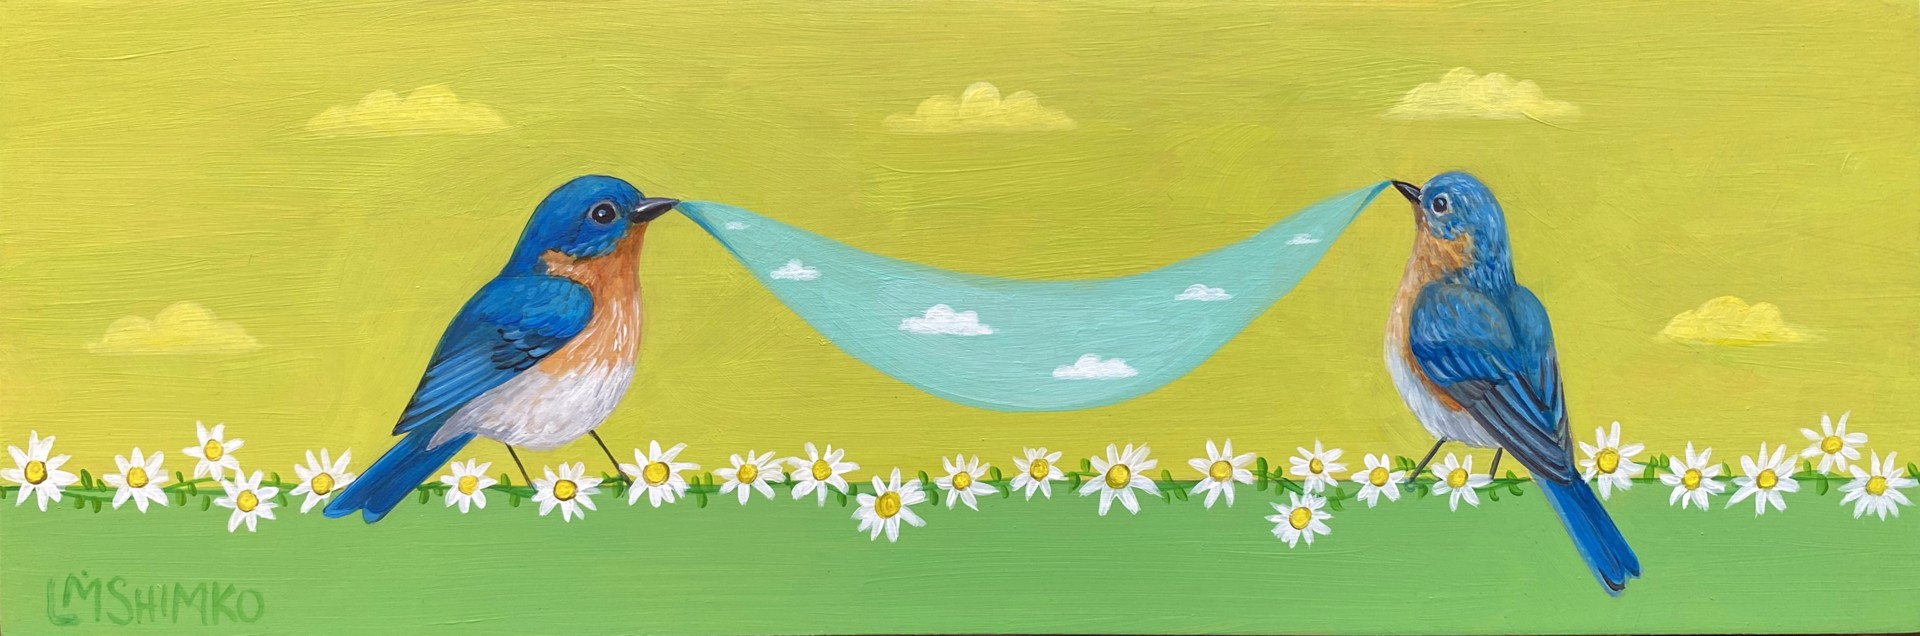 Daisy Chain Bluebird by Lisa Shimko